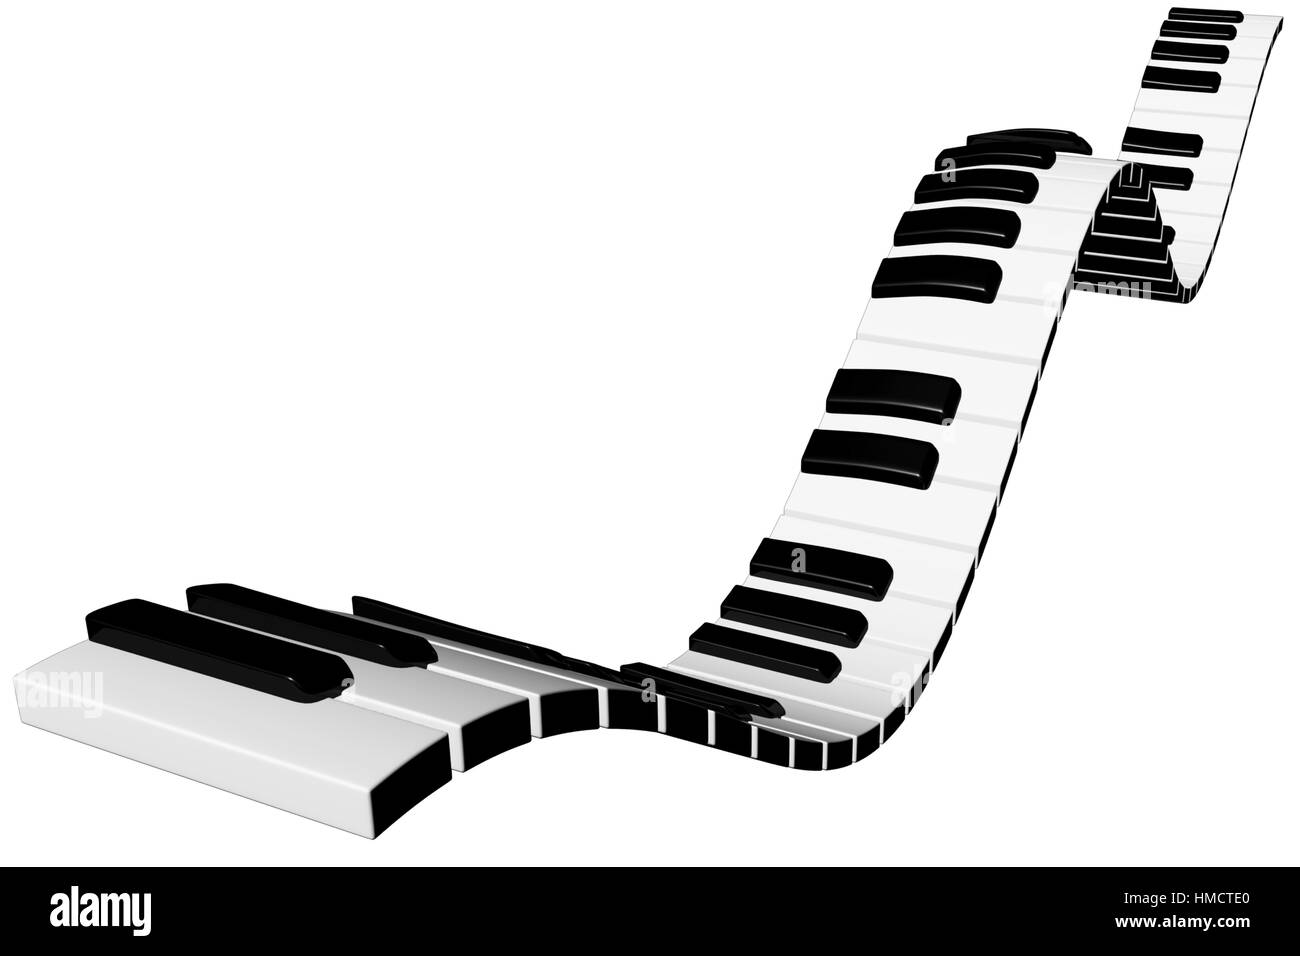 Piano keys illustration Black and White Stock Photos & Images - Alamy